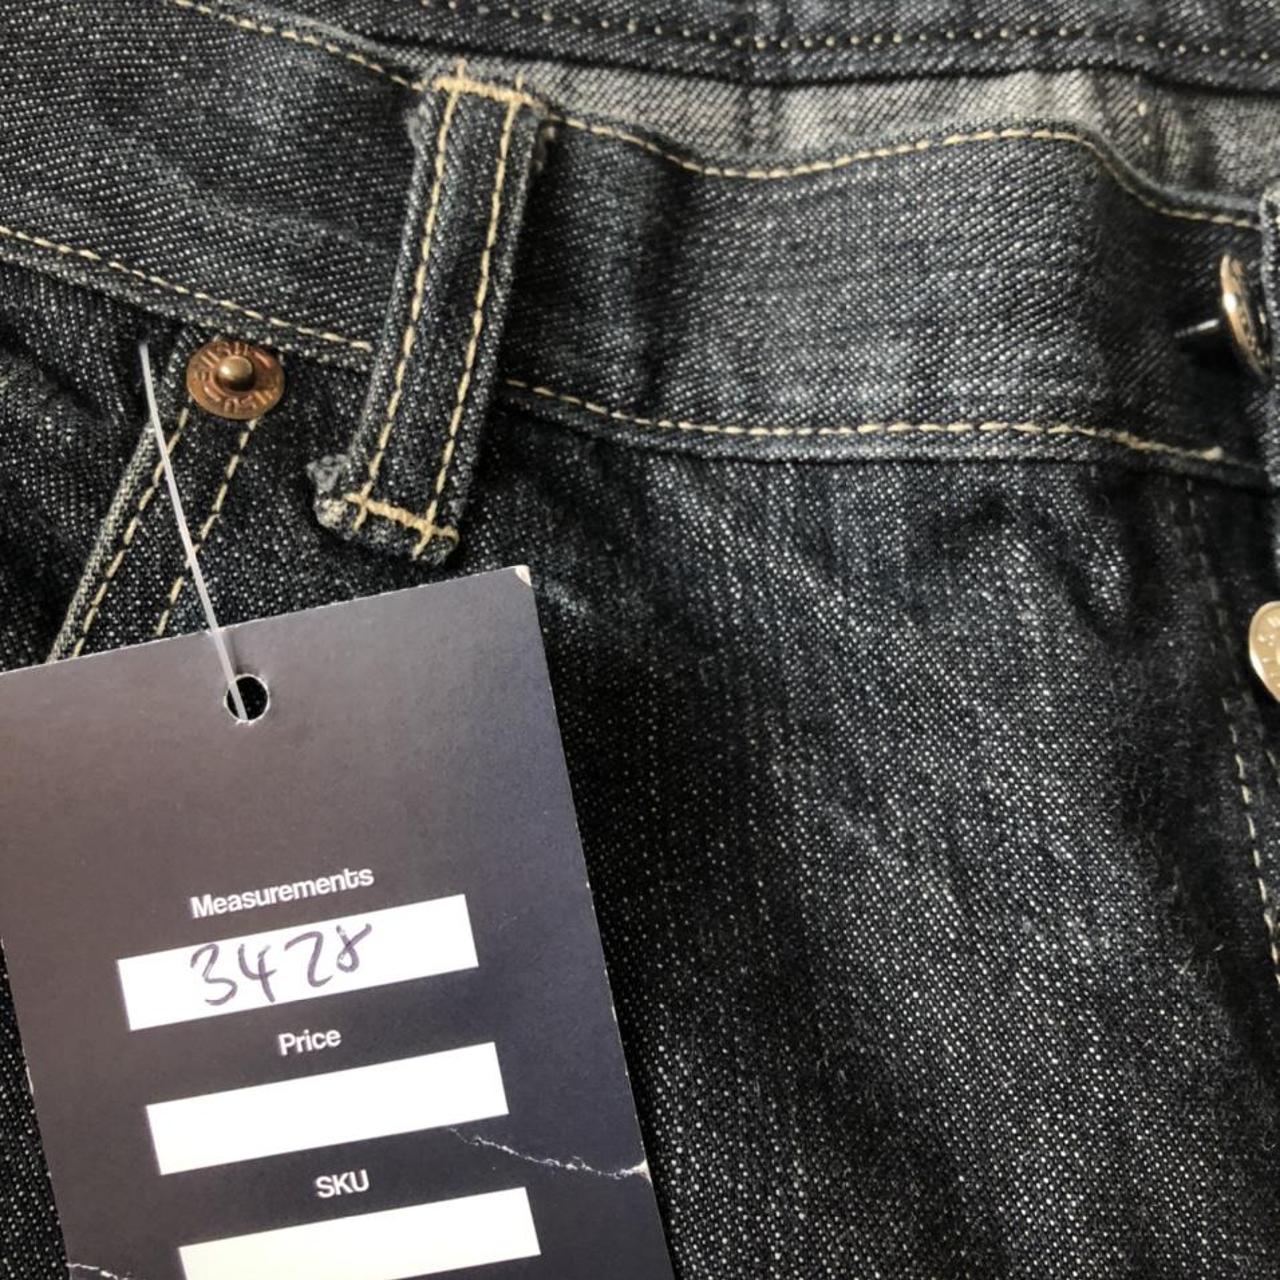 Evisu baggy jeans with detailing on back pockets and... - Depop